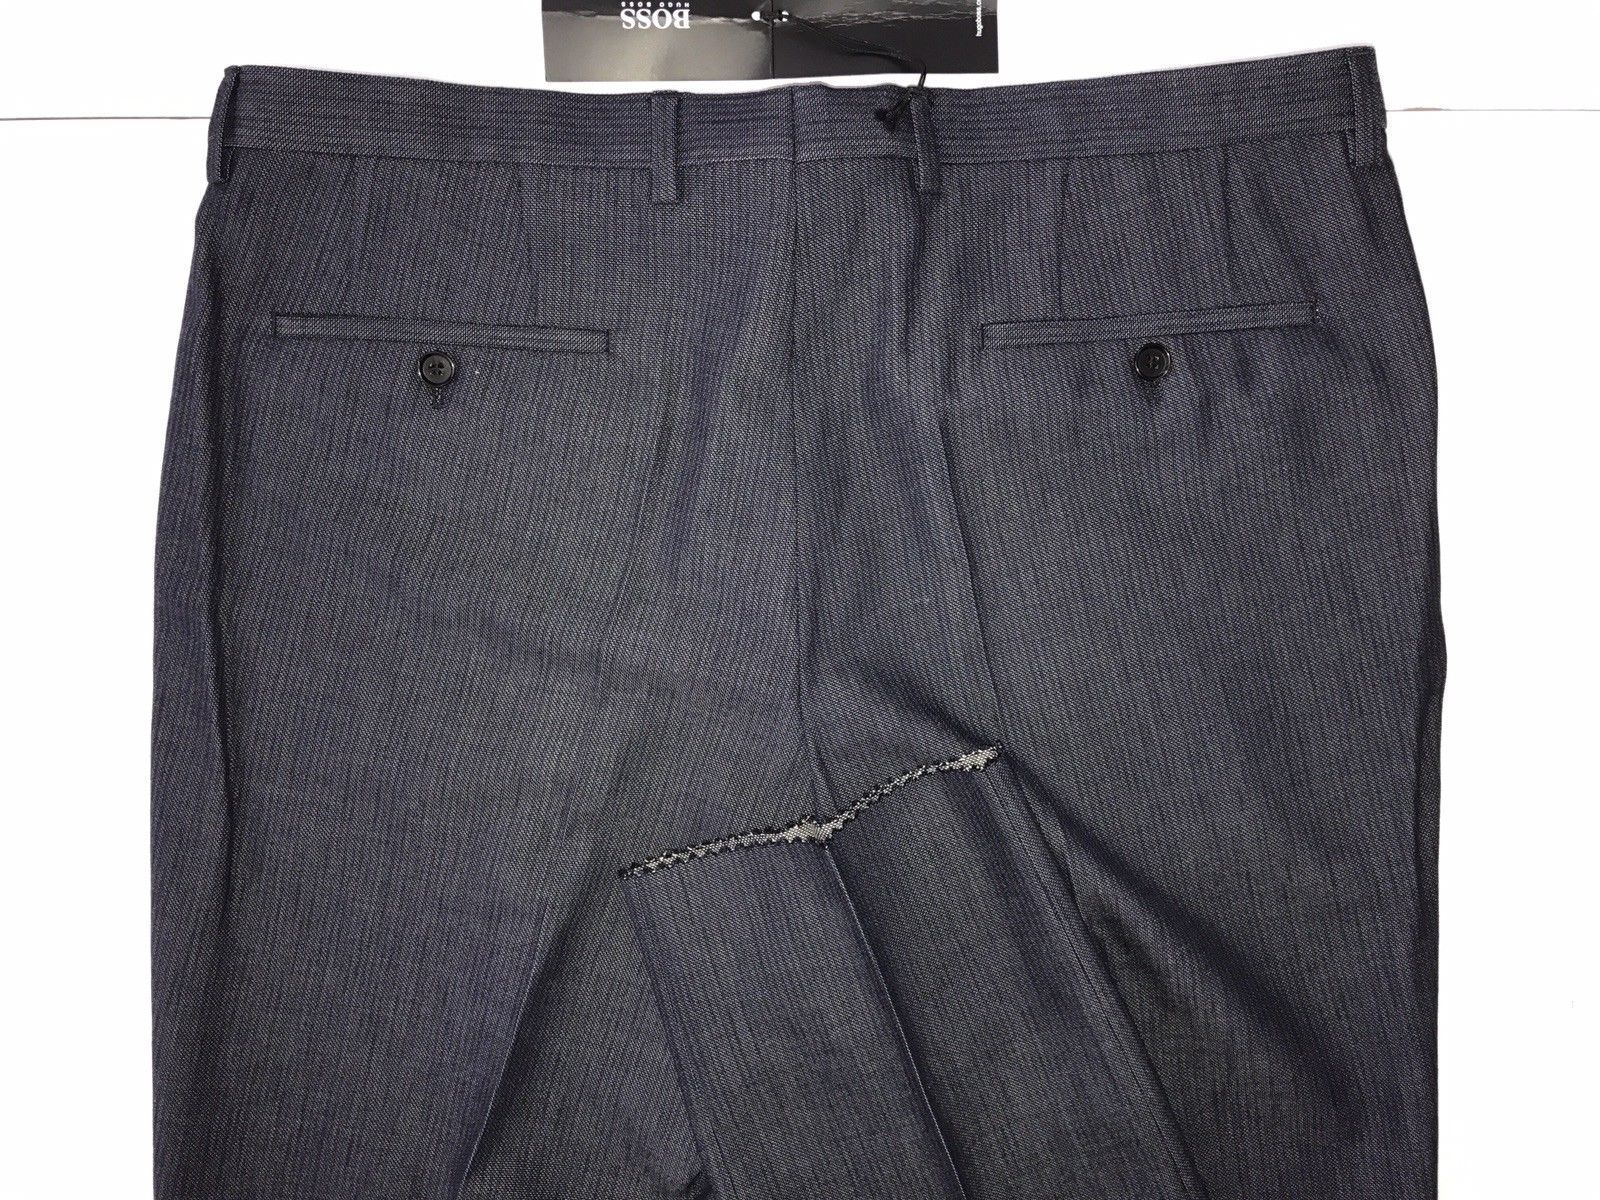 NWT $255 Boss Hugo Boss Central Mens Cotton Navy Dress Pants Size 36R US